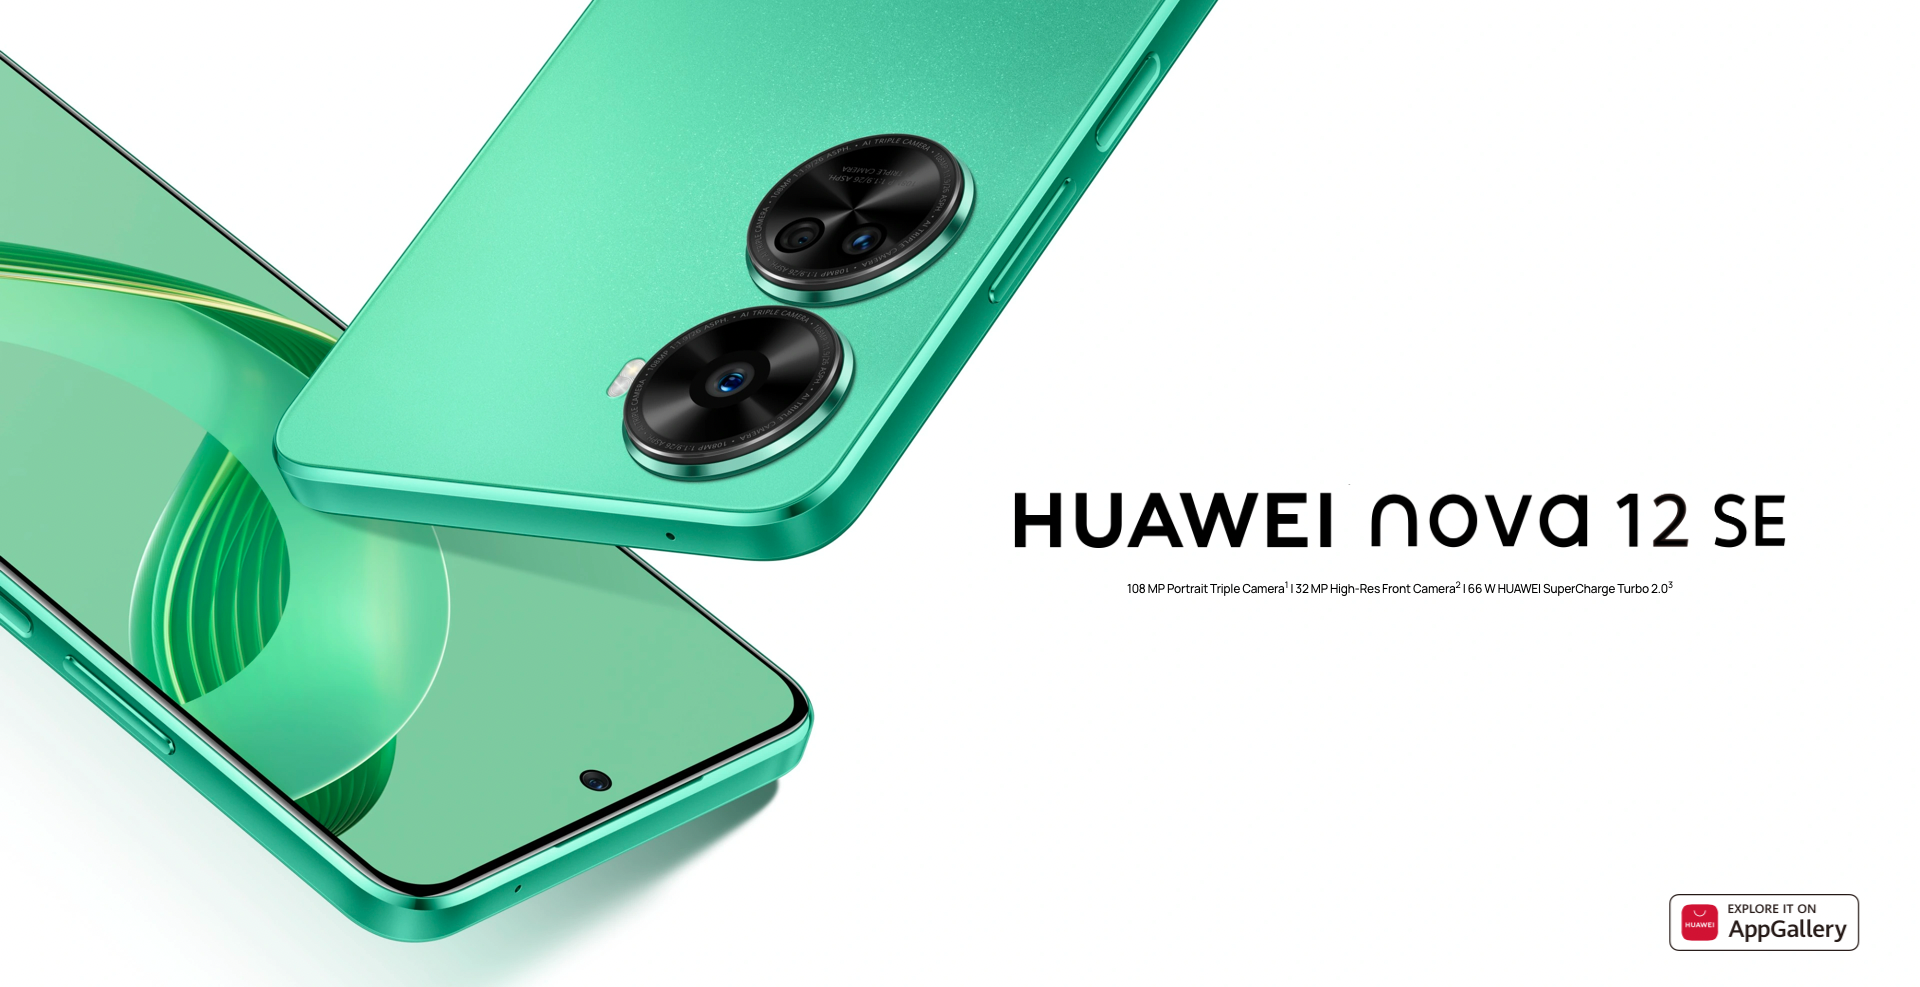 Huawei Nova 12 SE: OLED-Display, Snapdragon 680-Chip, 108-MP-Kamera und 66-W-Ladung